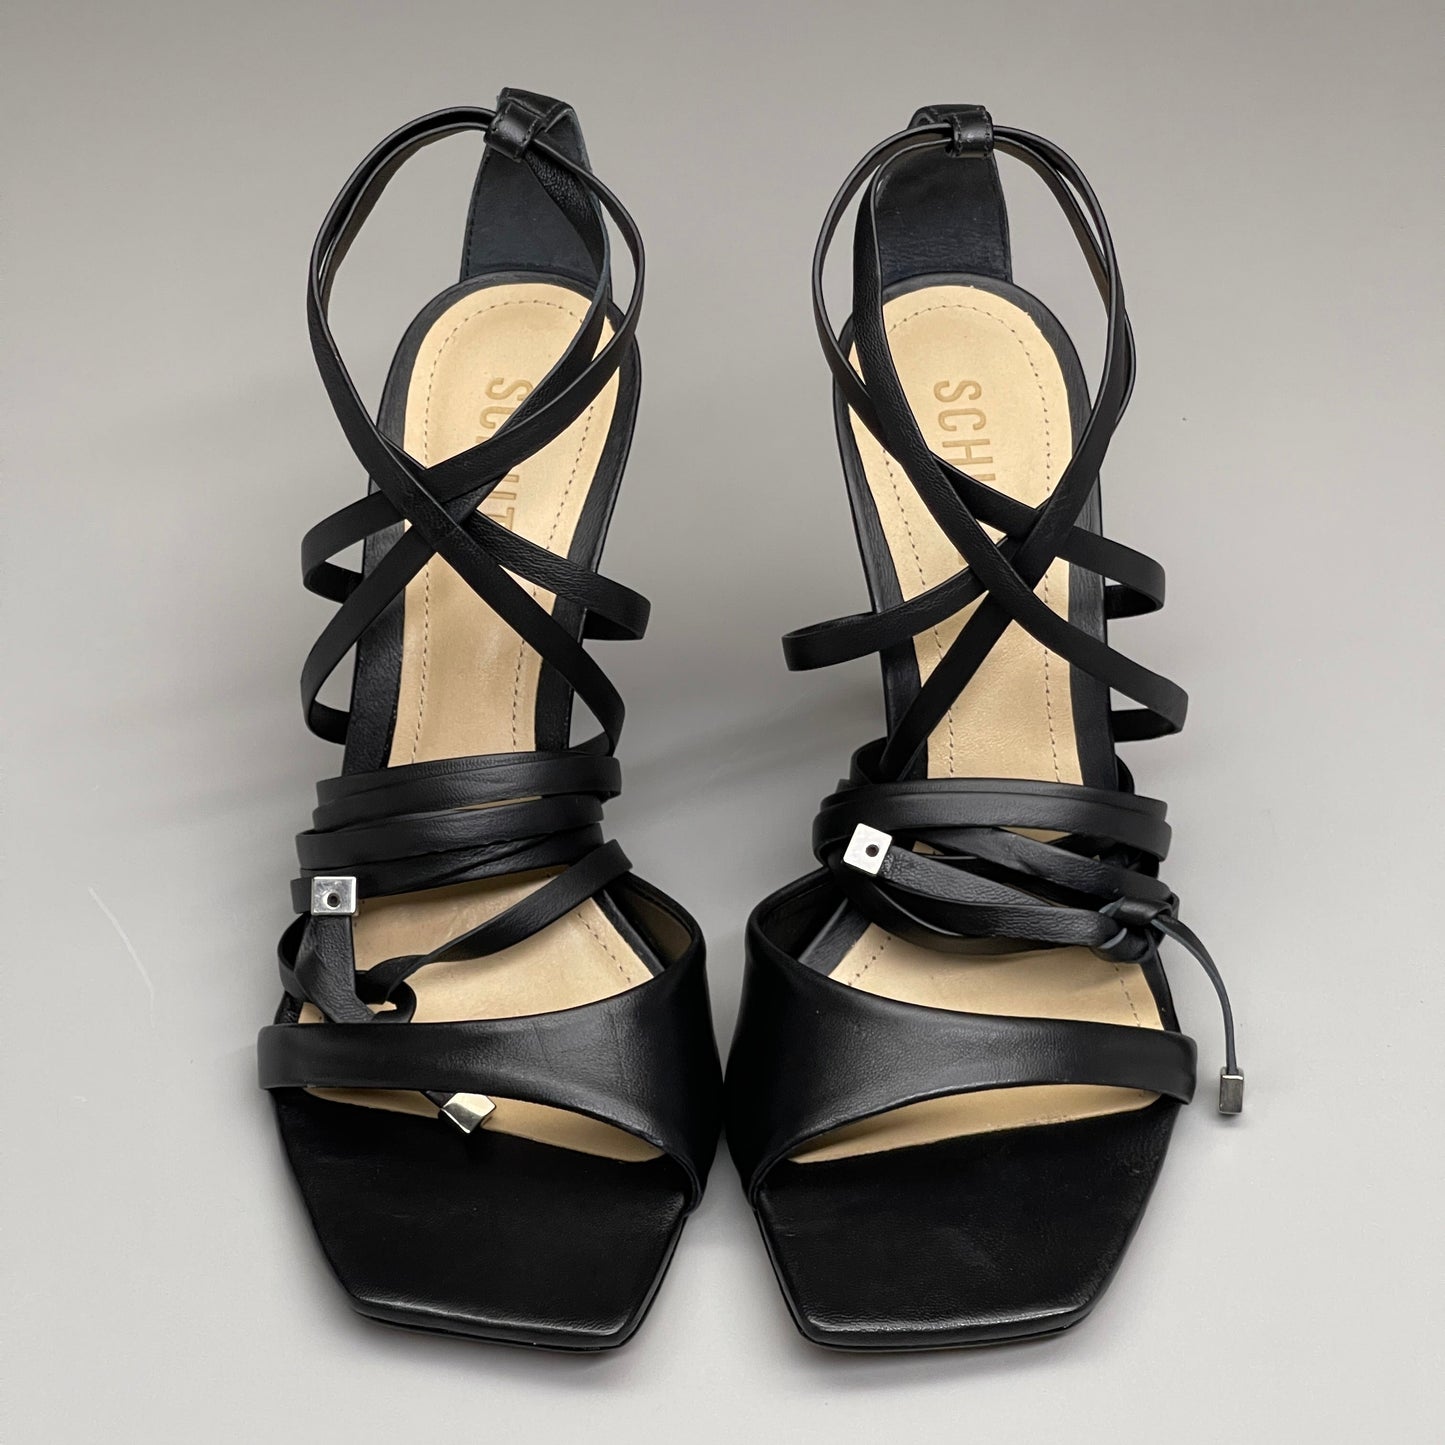 SCHUTZ Bryce Ankle Tie Women's Leather High Heel Strappy Sandal Black Sz 6B (New)